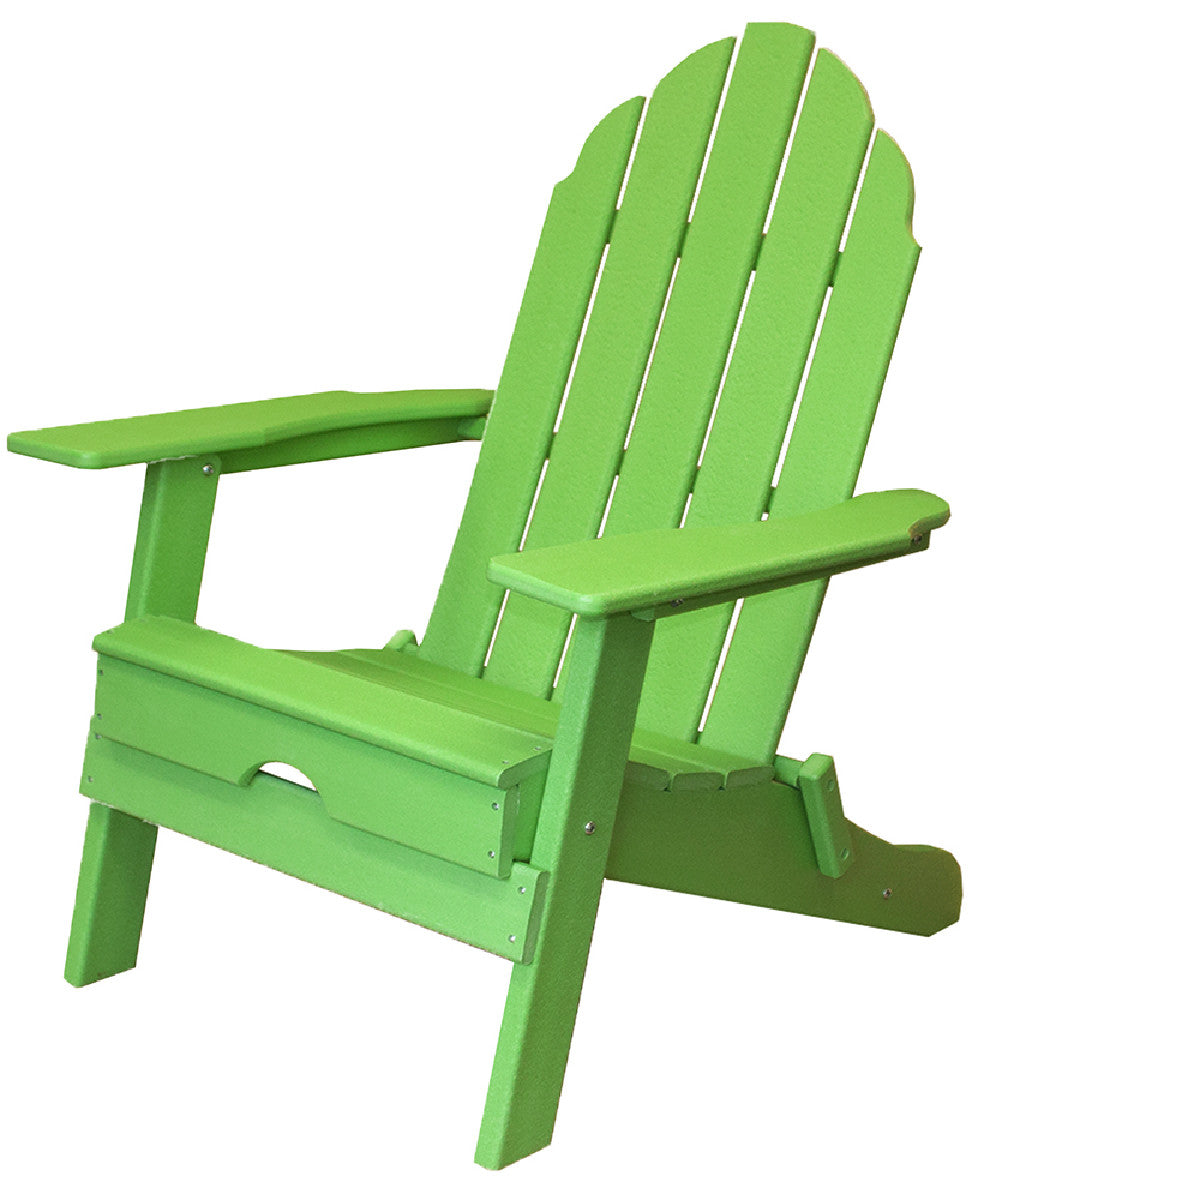 30" Green Heavy Duty Plastic Adirondack Chair